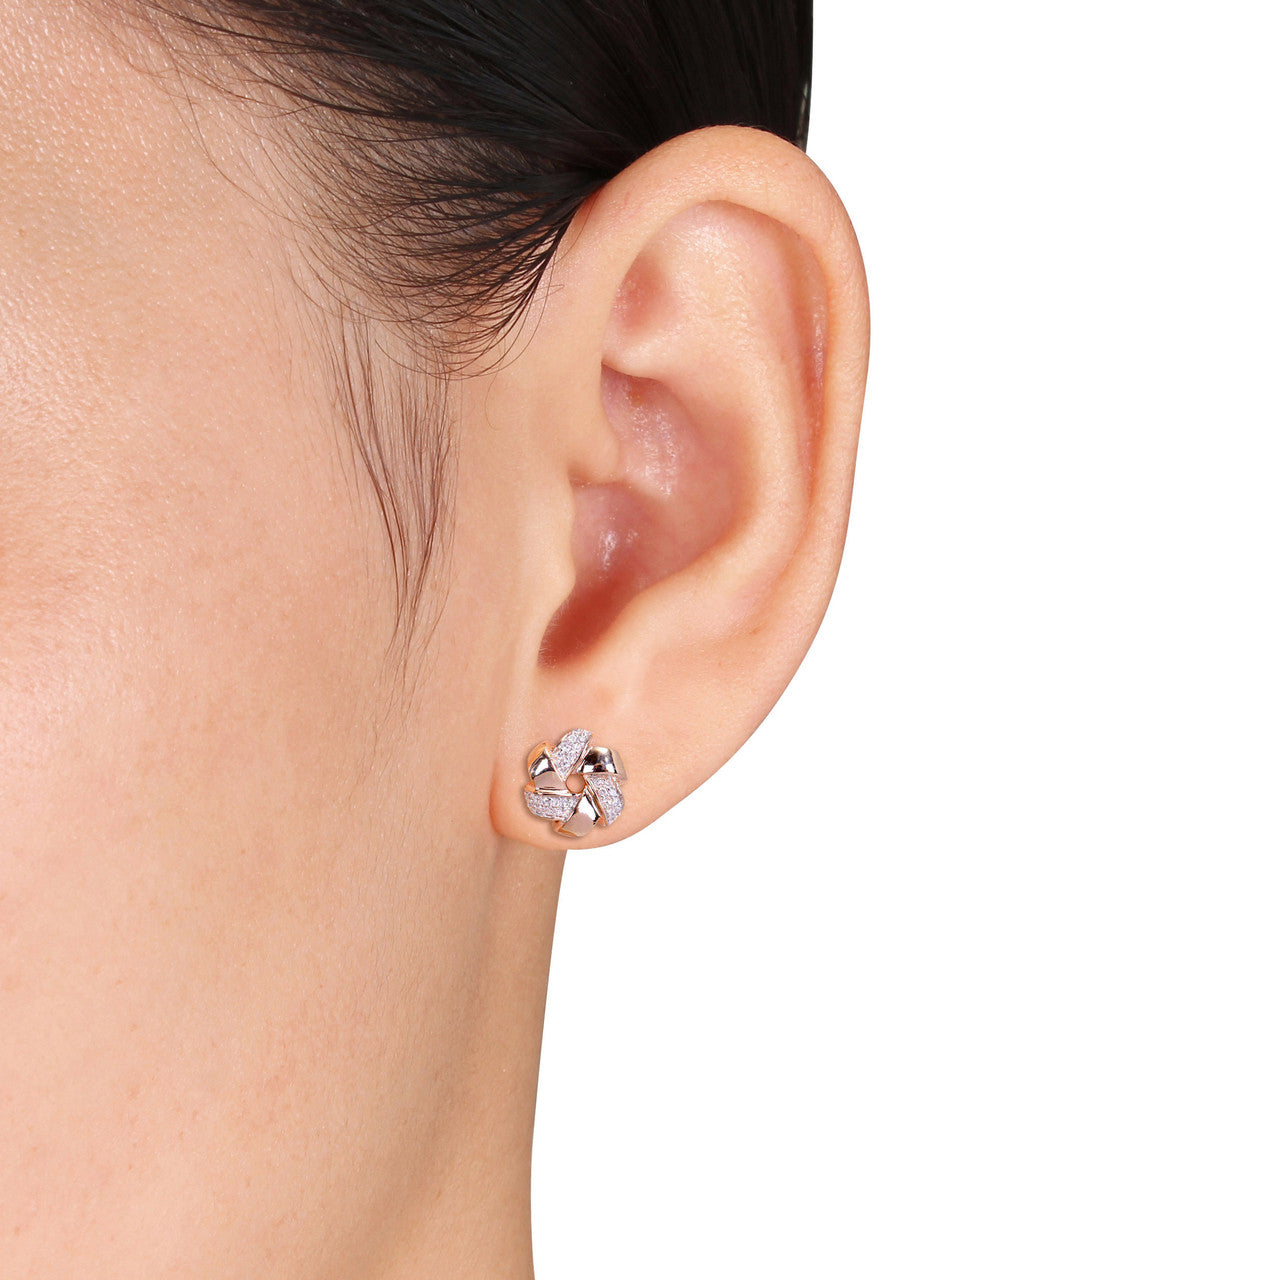 Ice Jewellery 1/6 CT TW Diamond Swirl Stud Earrings In 14K Rose Gold - 75000004196 | Ice Jewellery Australia